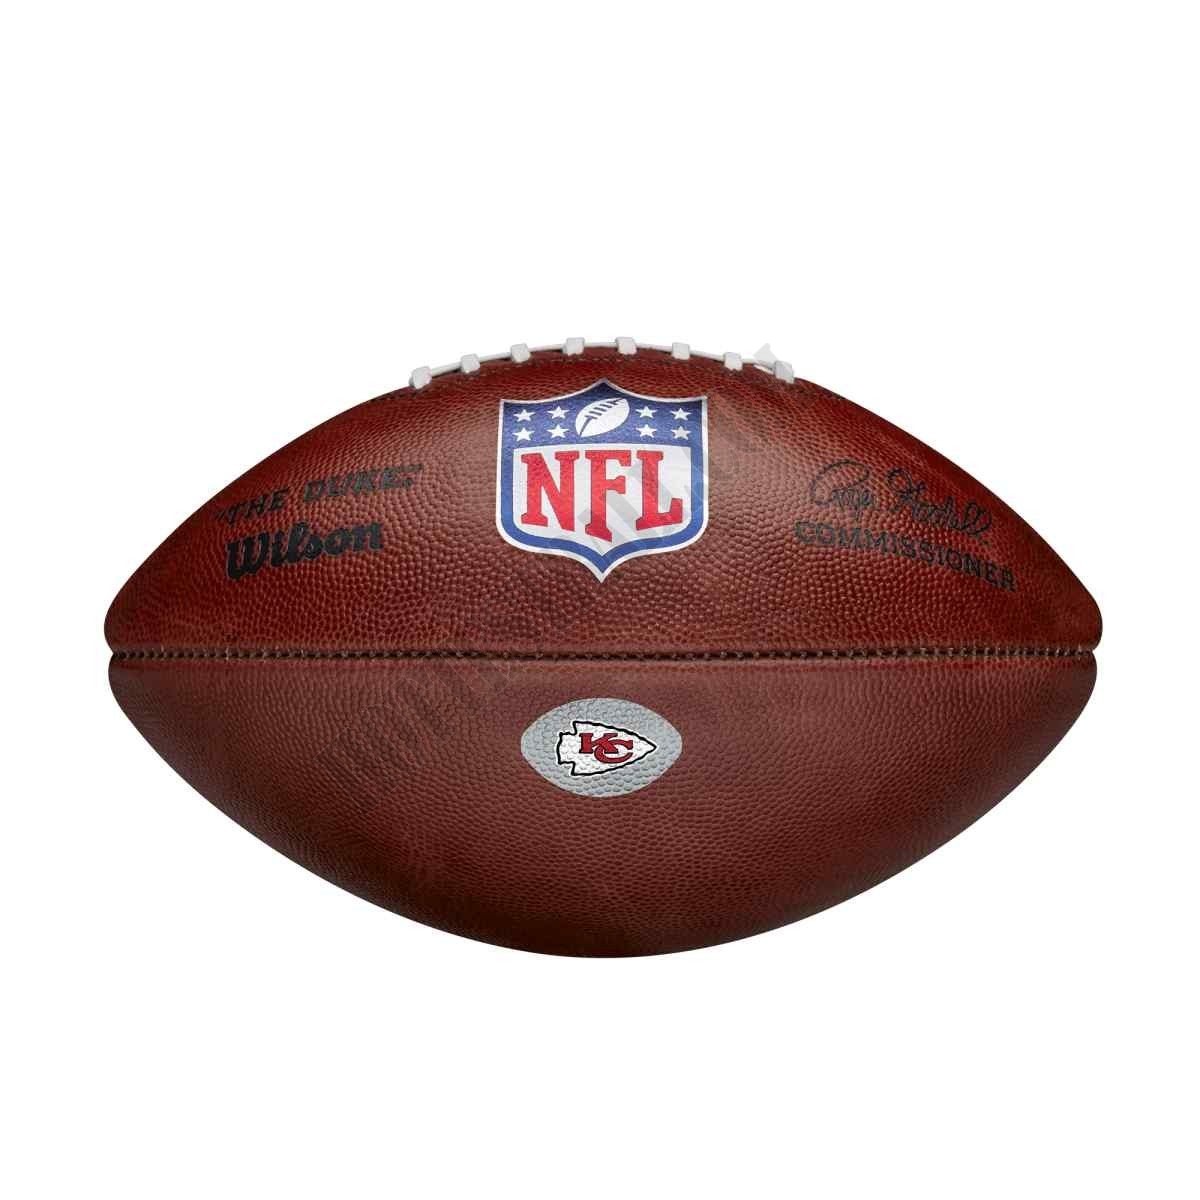 The Duke Decal NFL Football - Kansas City Chiefs - Wilson Discount Store - The Duke Decal NFL Football - Kansas City Chiefs - Wilson Discount Store